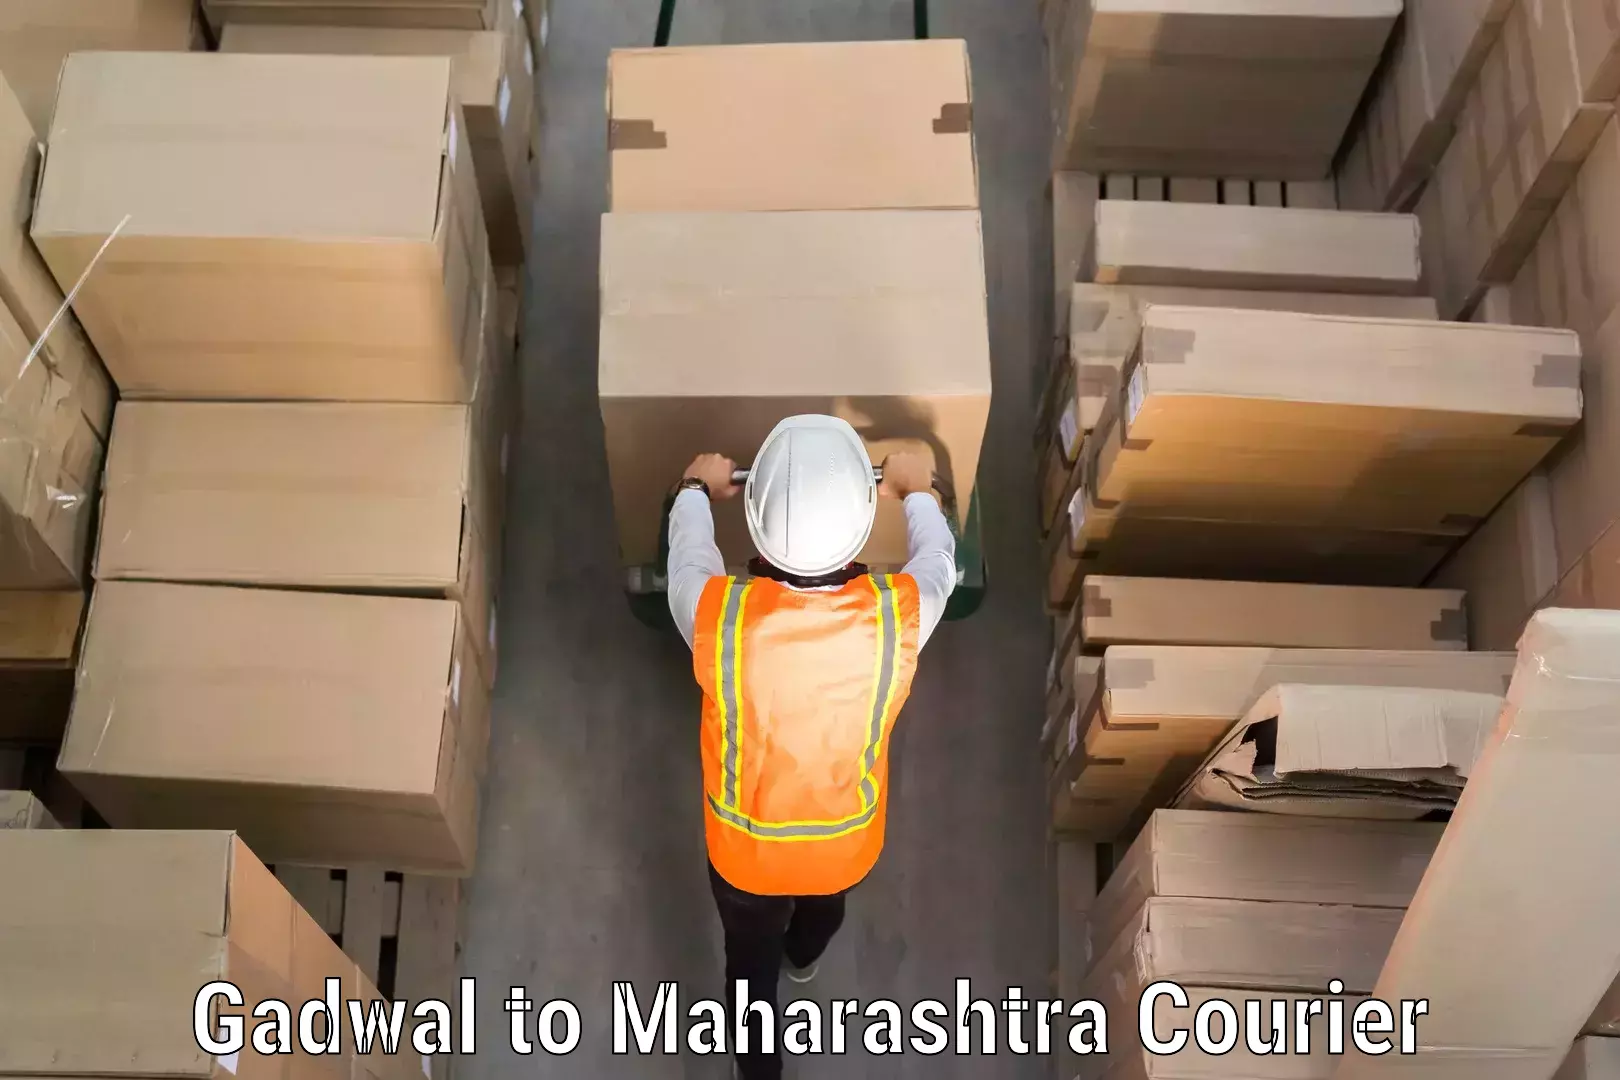 Luggage shipment specialists Gadwal to Maharashtra